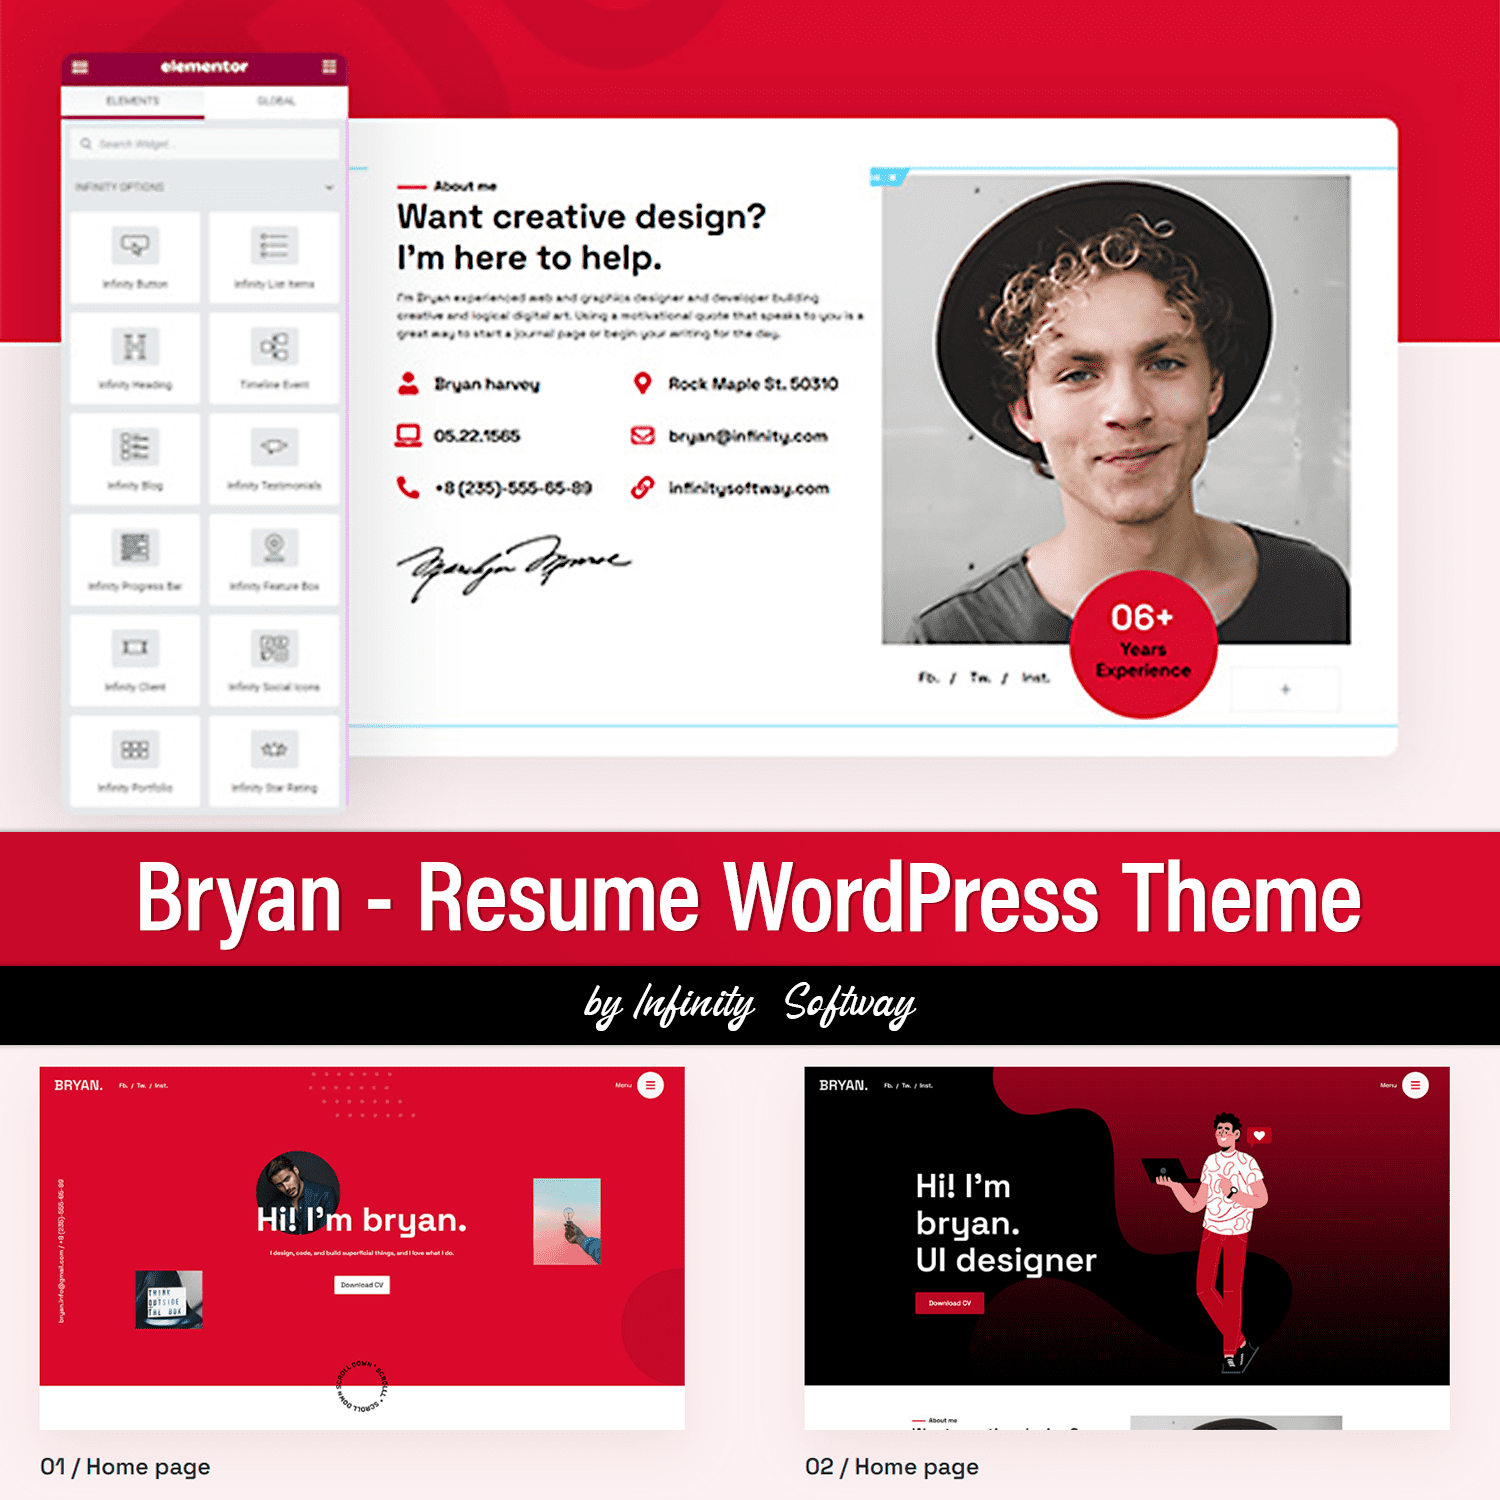 Bryan - Resume WordPress Theme.